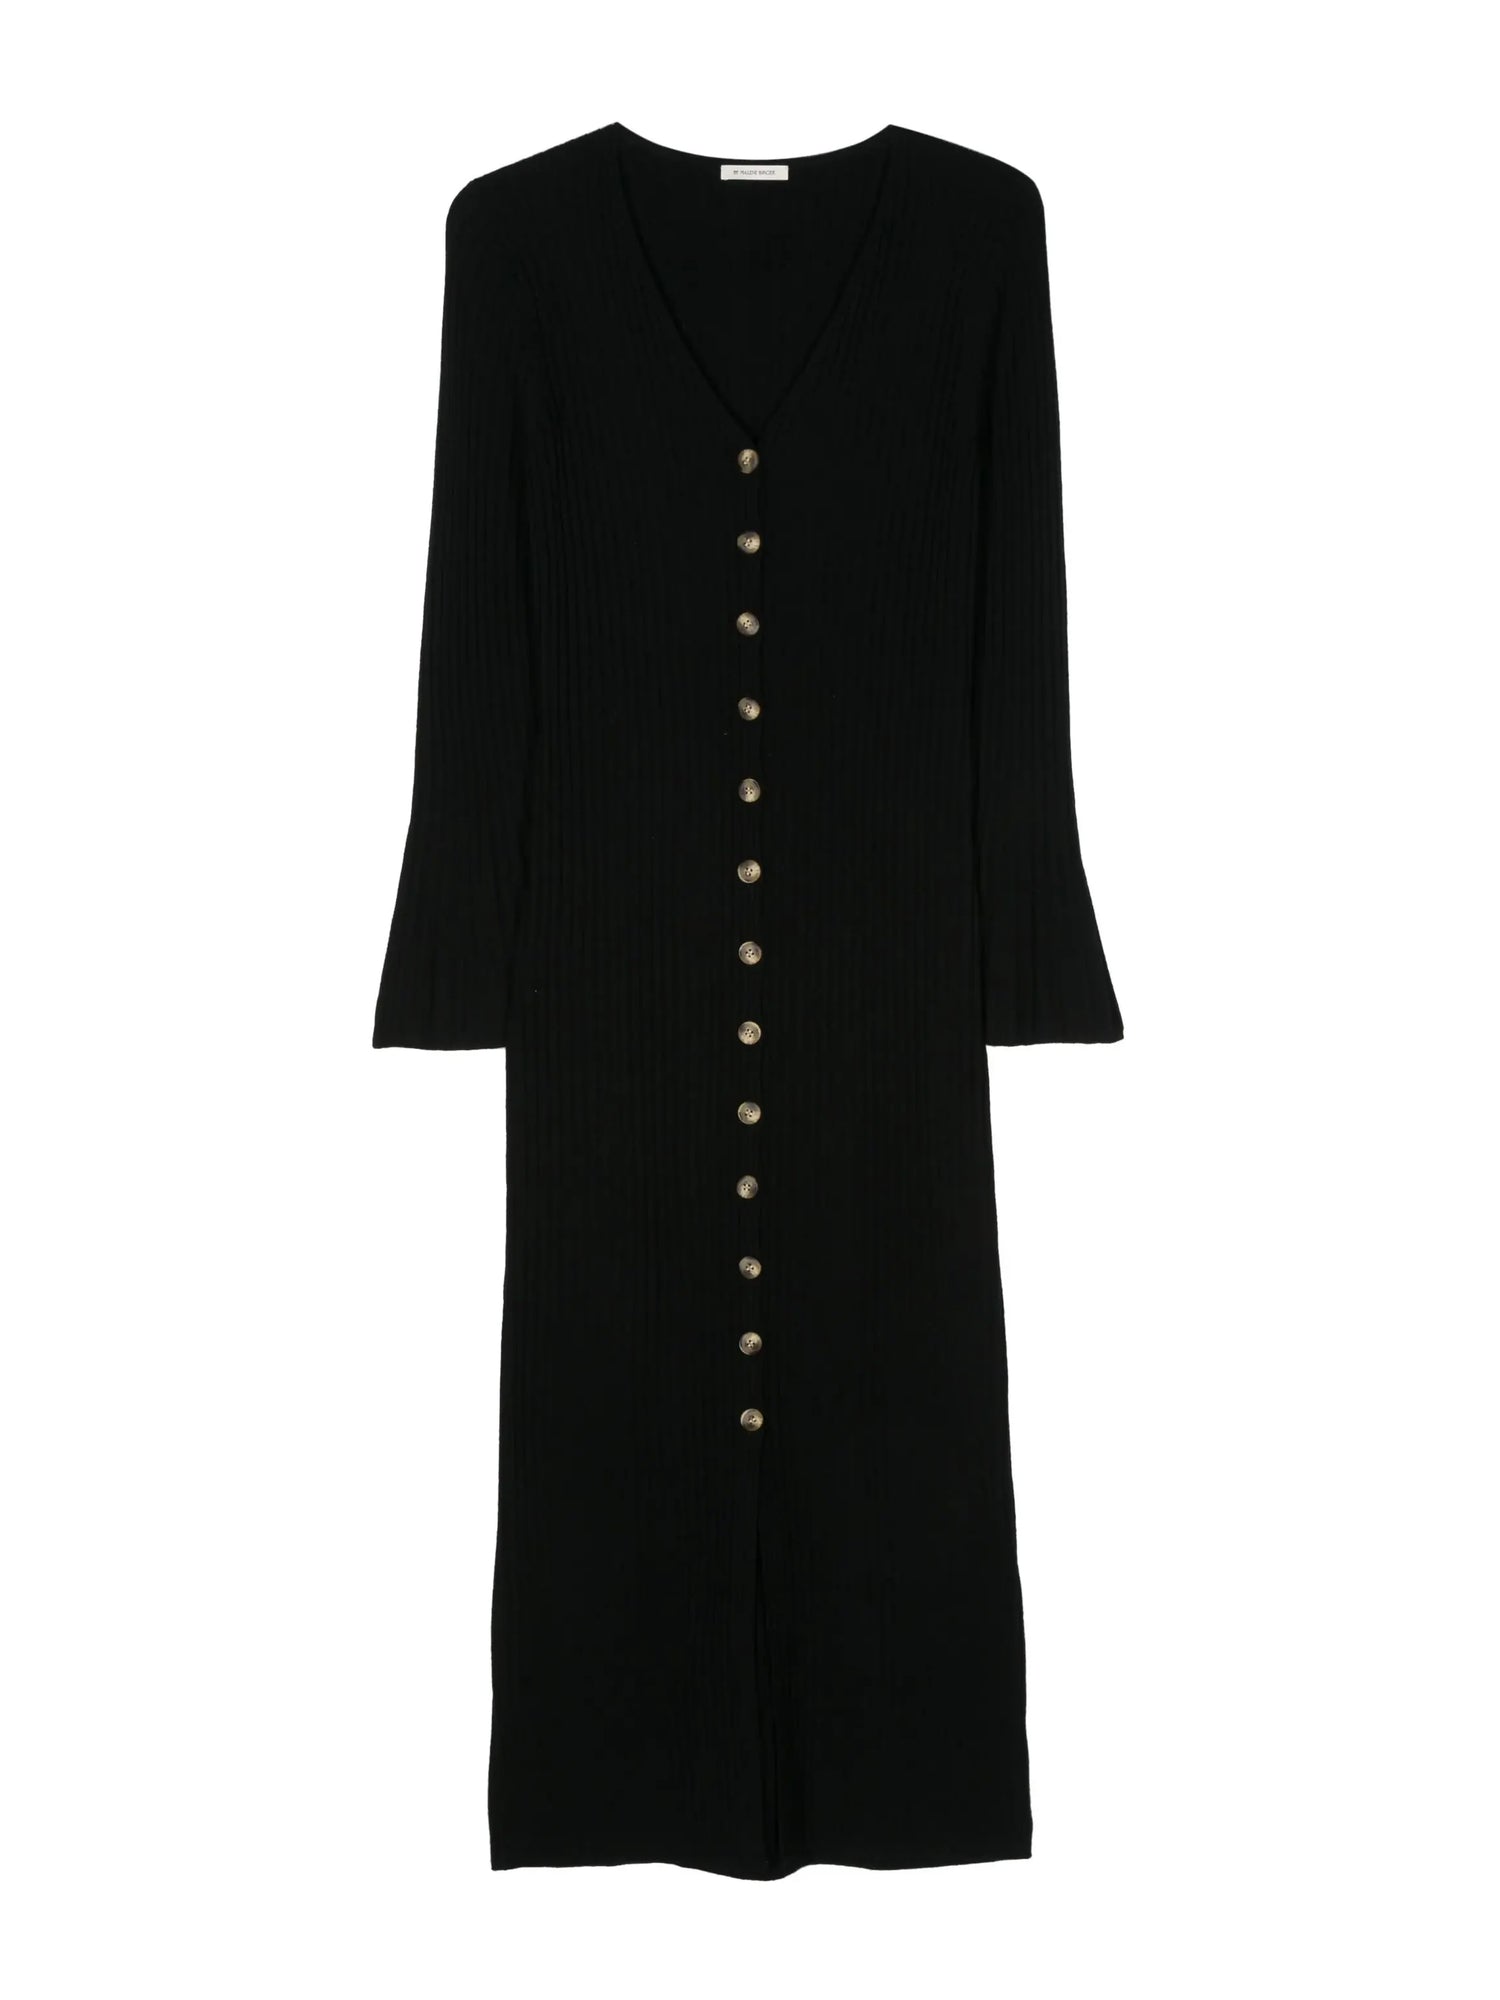 COLEA wool dress, black